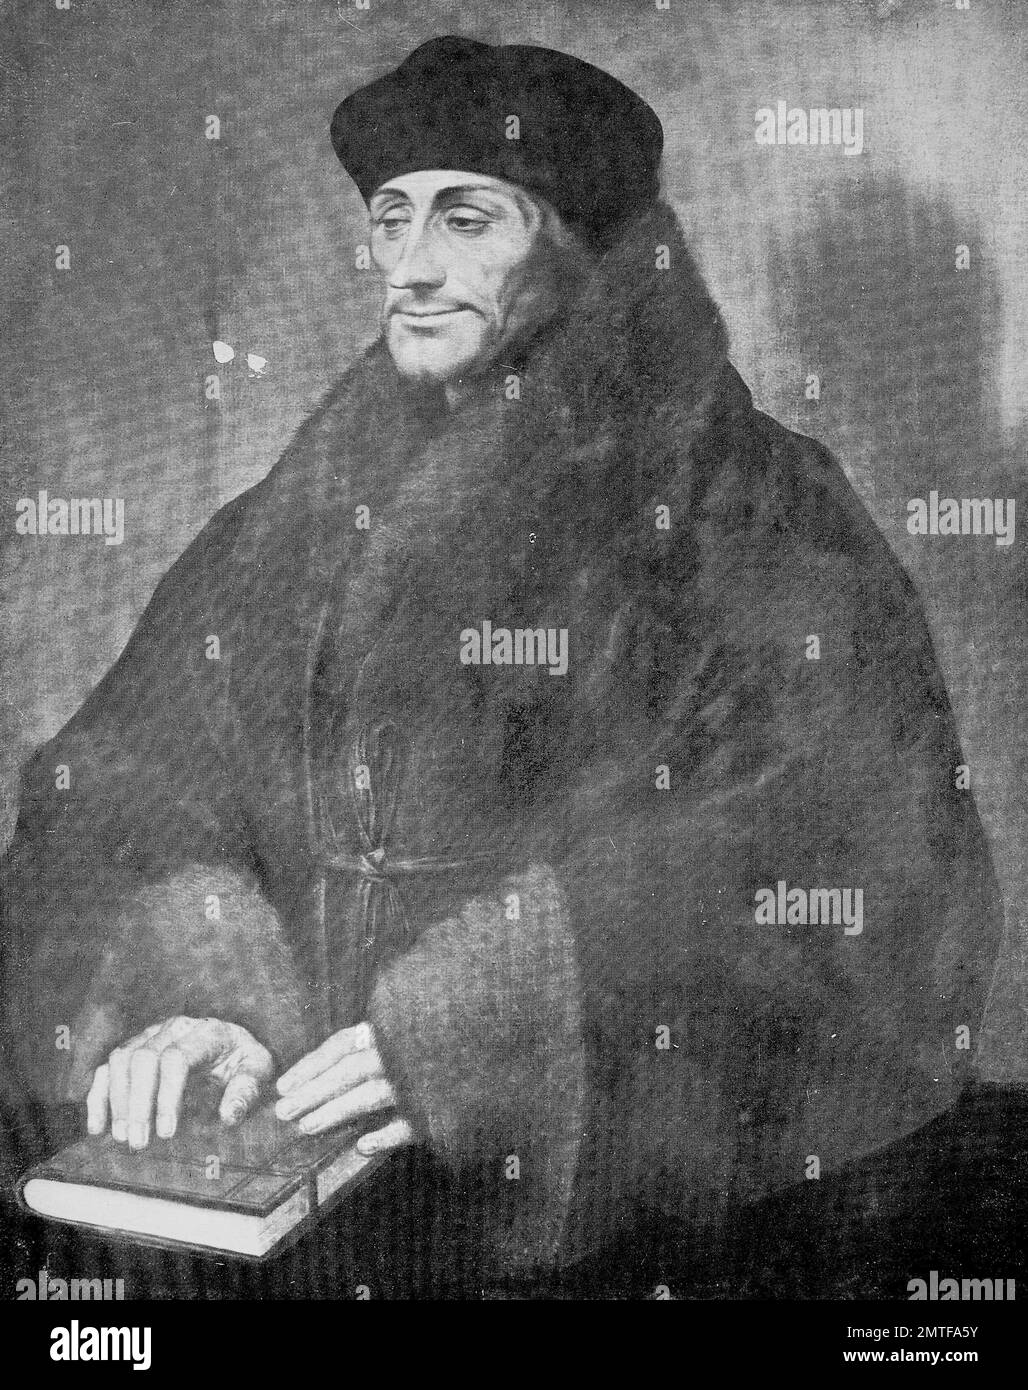 Desiderius Erasmus Roterodamus, known as Erasmus or Erasmus of Rotterdam, was a Dutch Renaissance humanist, Catholic priest, social critic, teacher, and theologian. Stock Photo